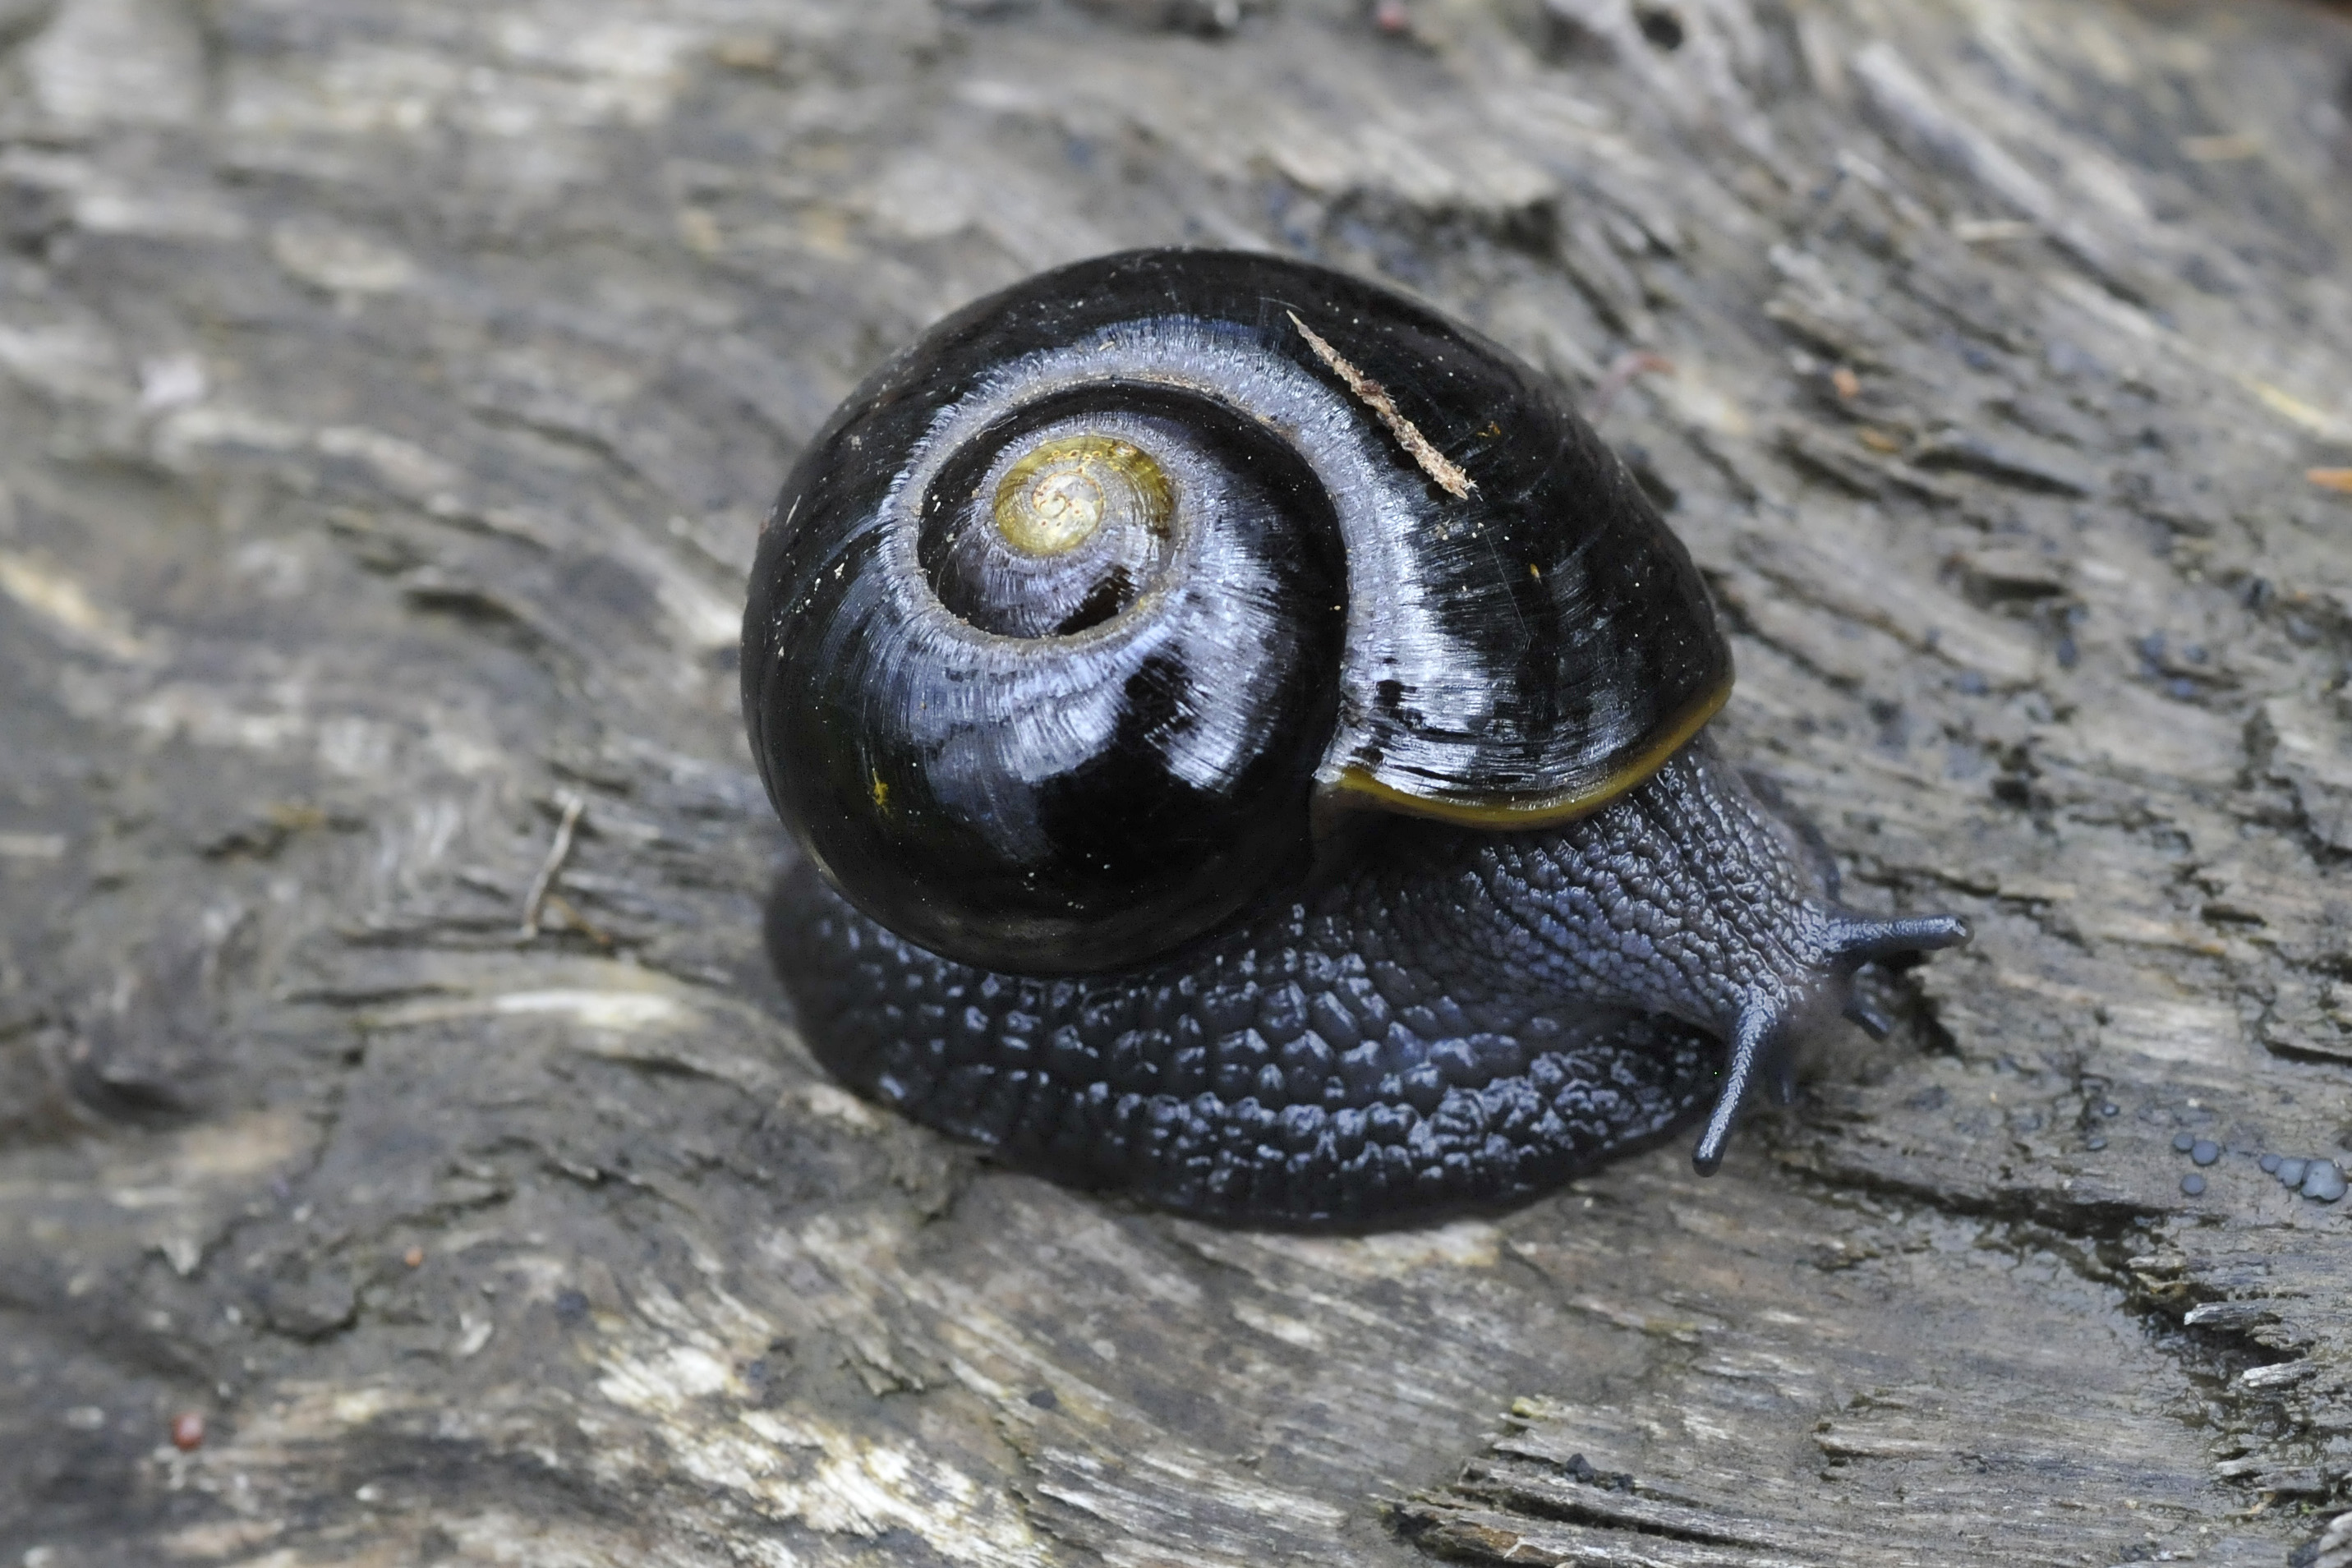 Otway Black Snail (Victaphanta compacta